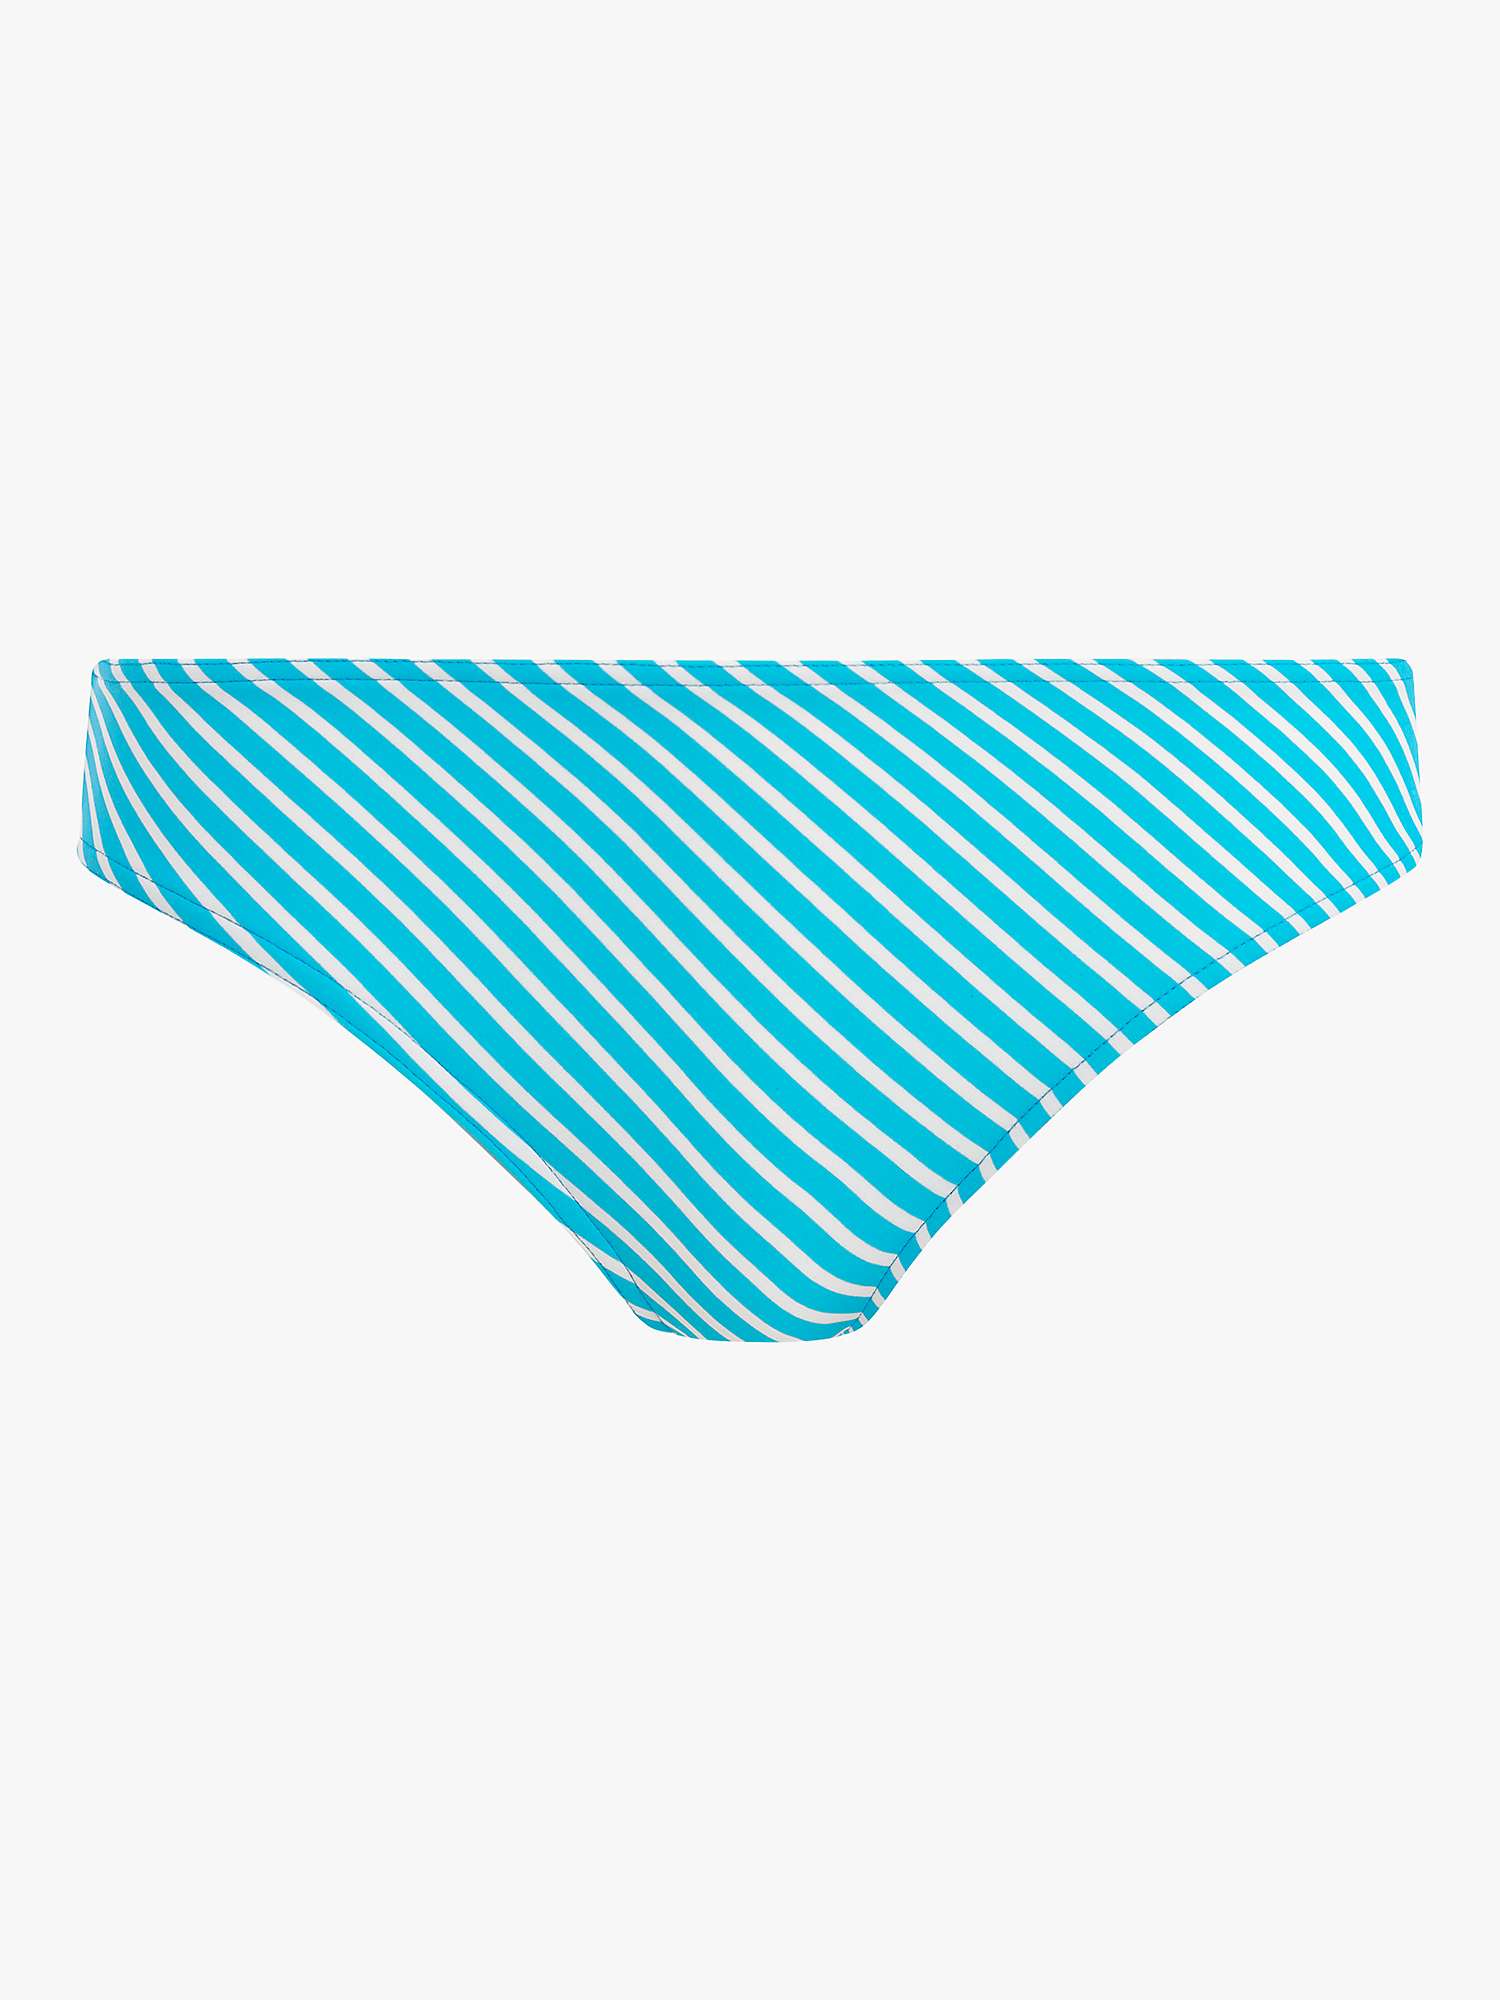 Buy Freya Jewel Cove Stripe Bikini Bottoms, Turquoise/Multi Online at johnlewis.com